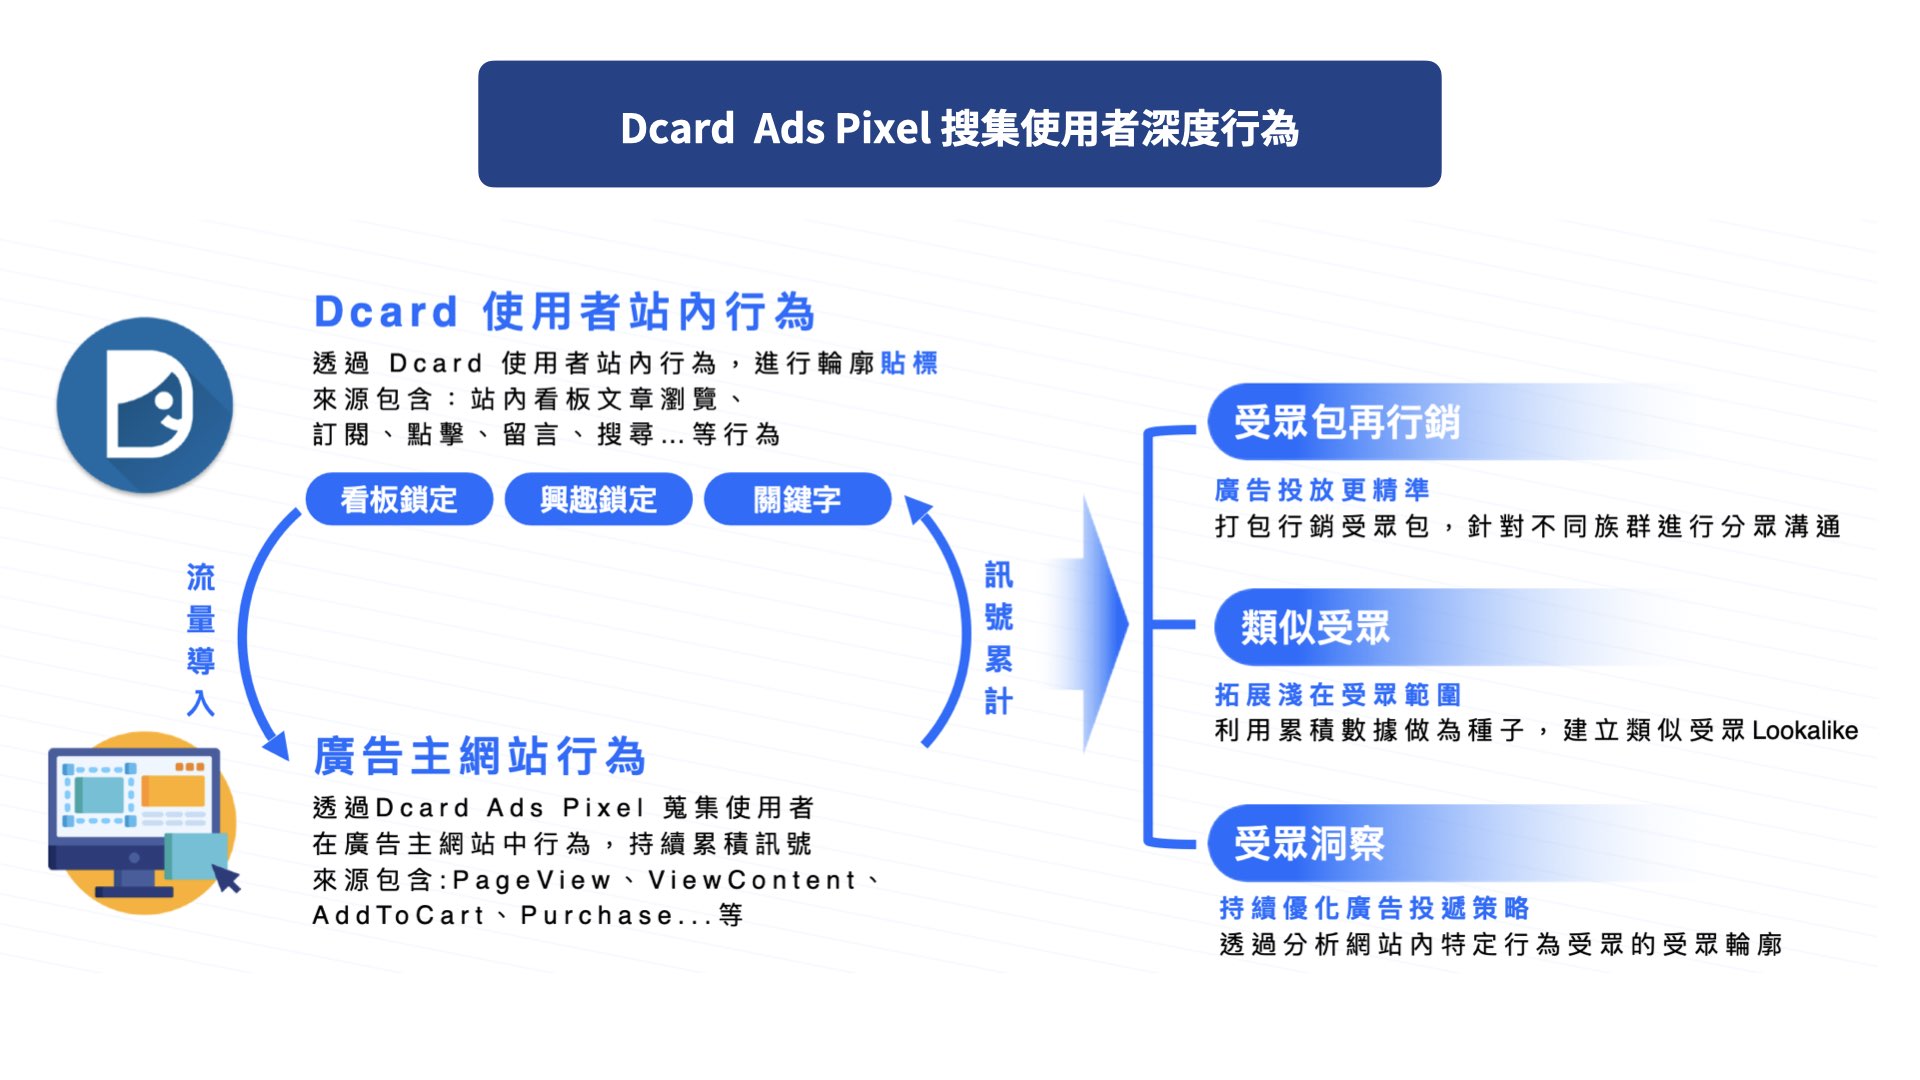 Dcard Ads Pixel 搜集使用者深度行為